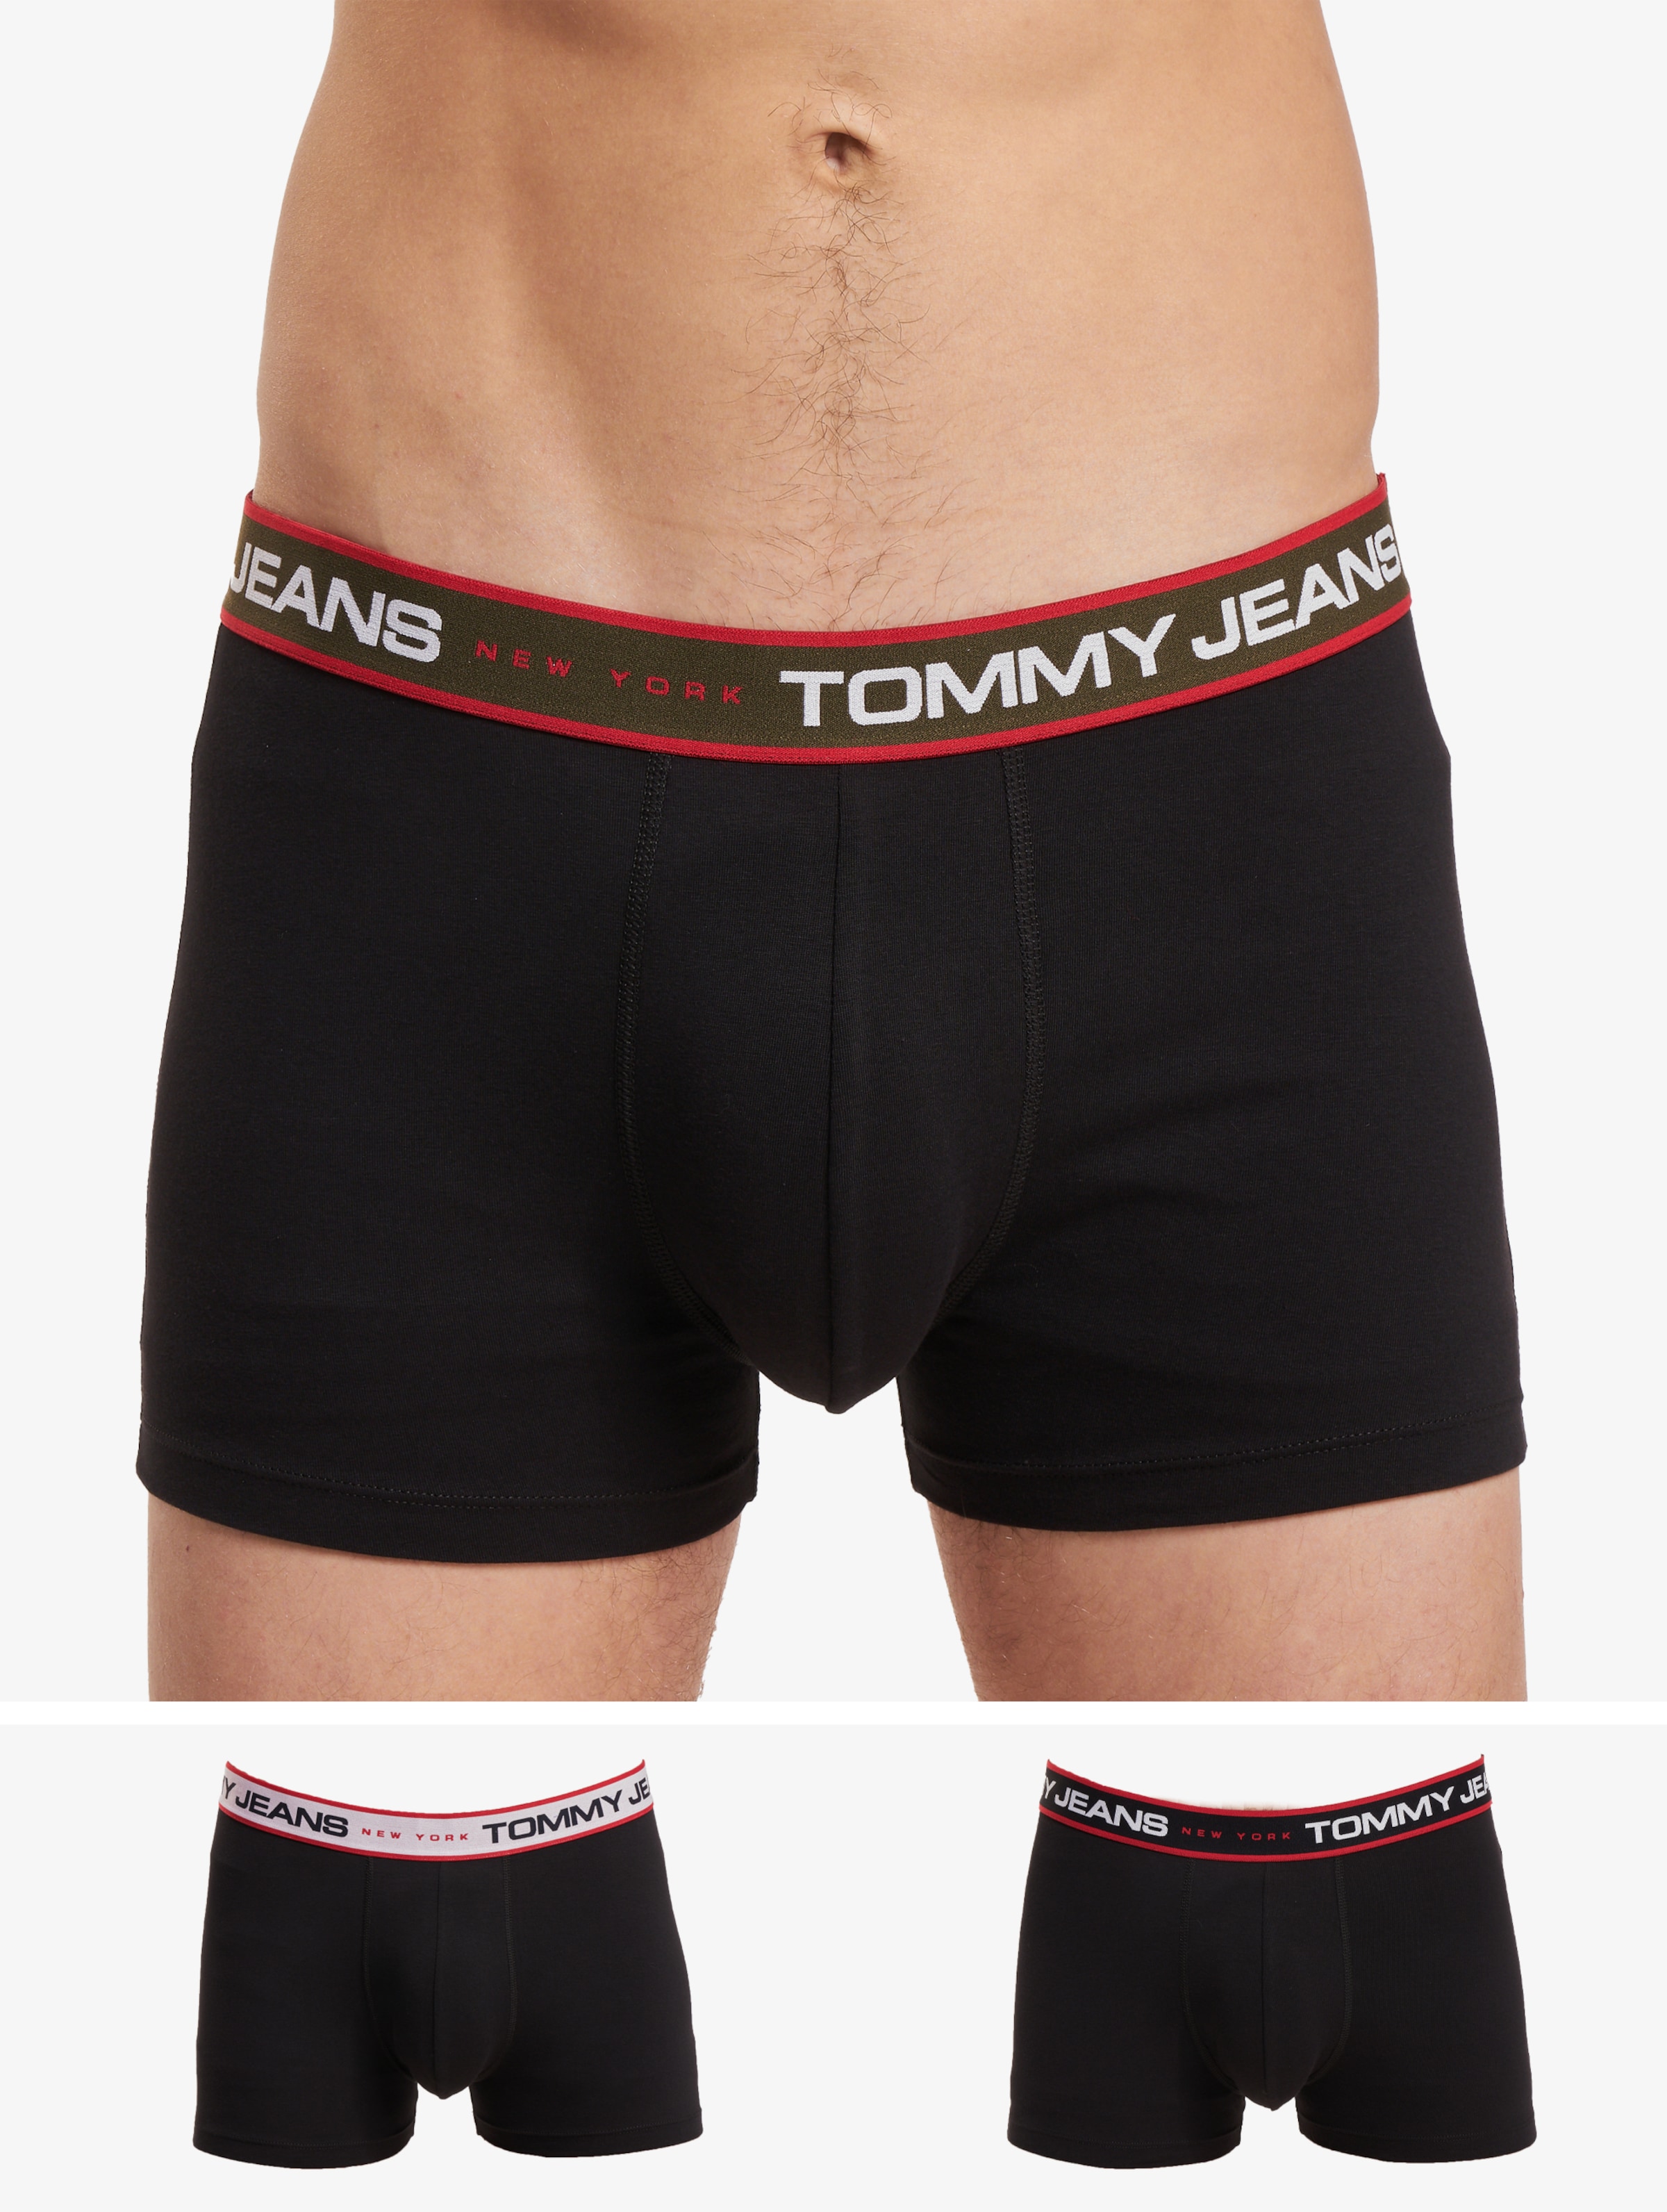 Tommy Hilfiger 3 Pack Boxershorts Männer,Unisex op kleur zwart, Maat L